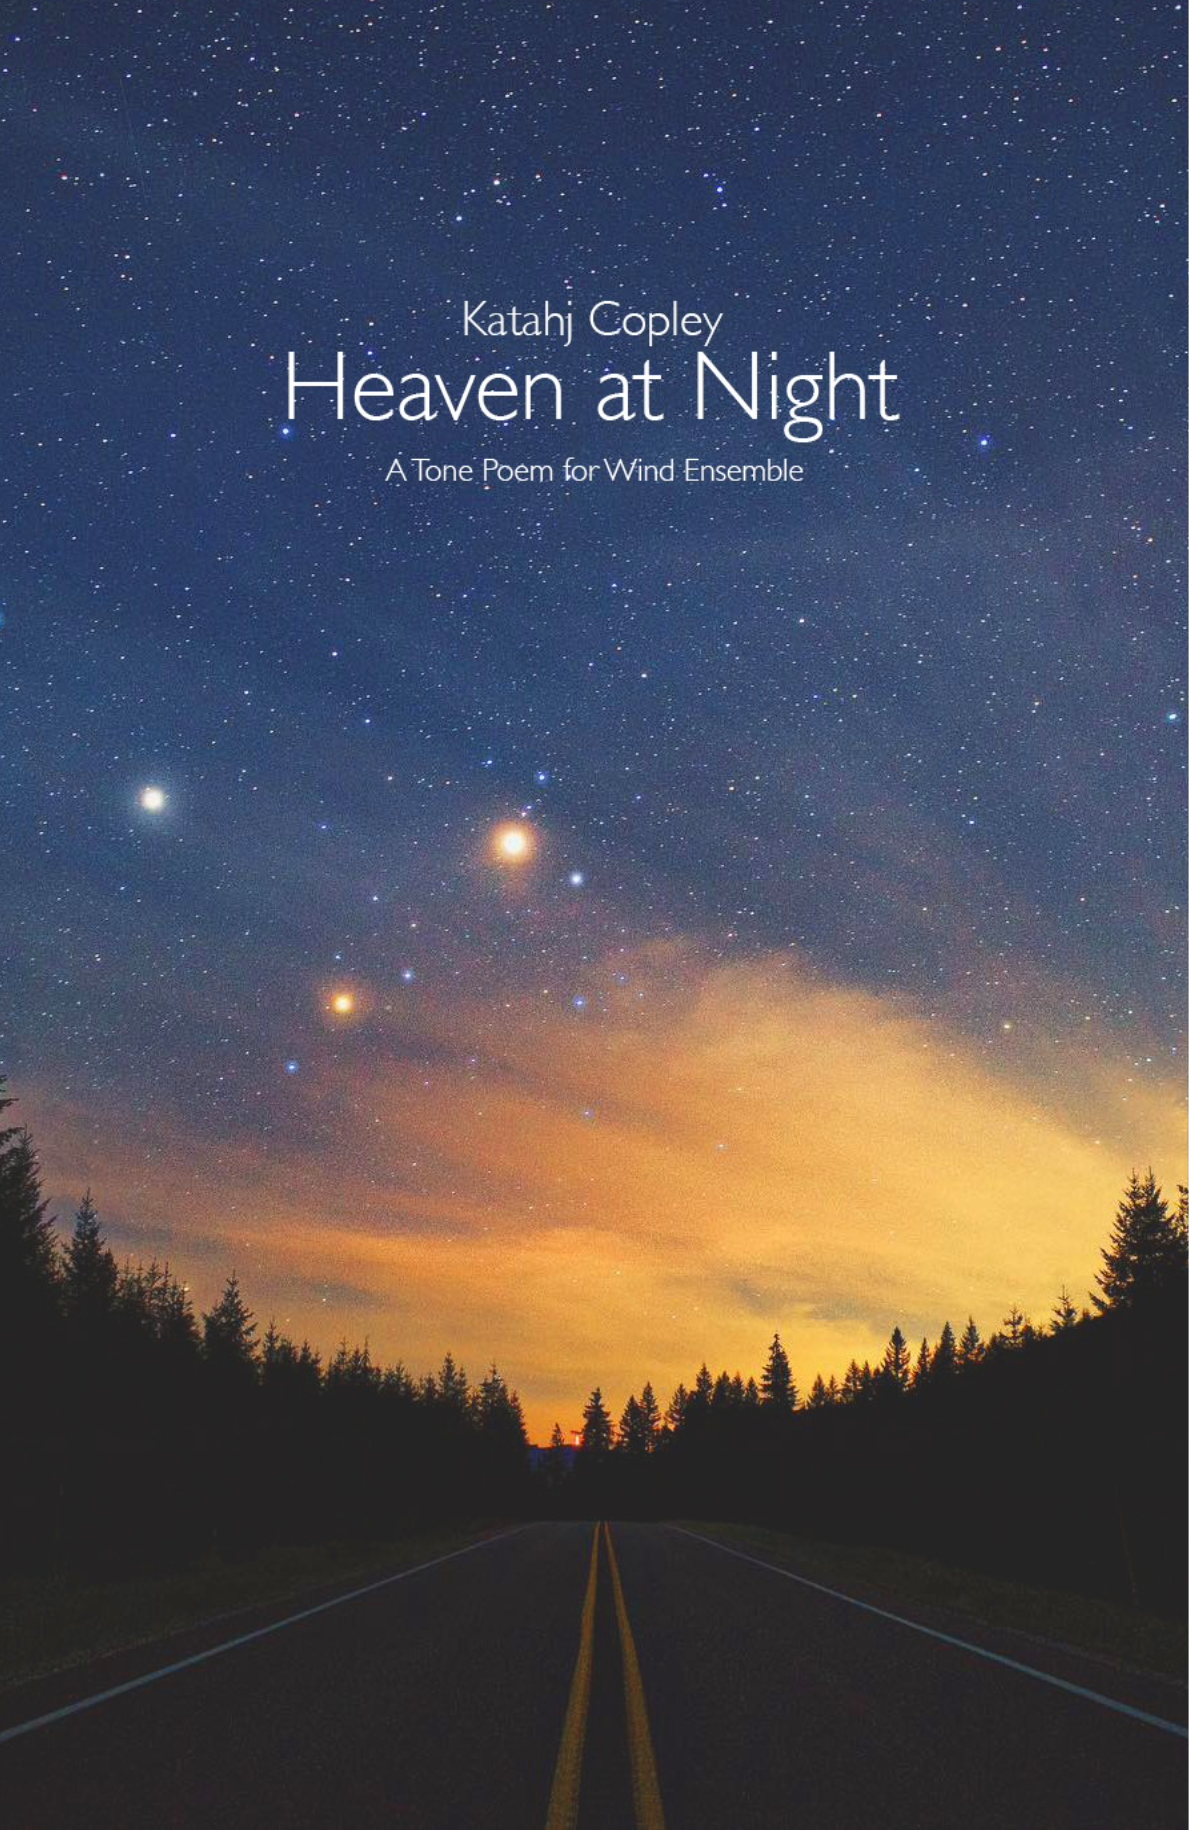 Heaven At Night by Katahj Copley